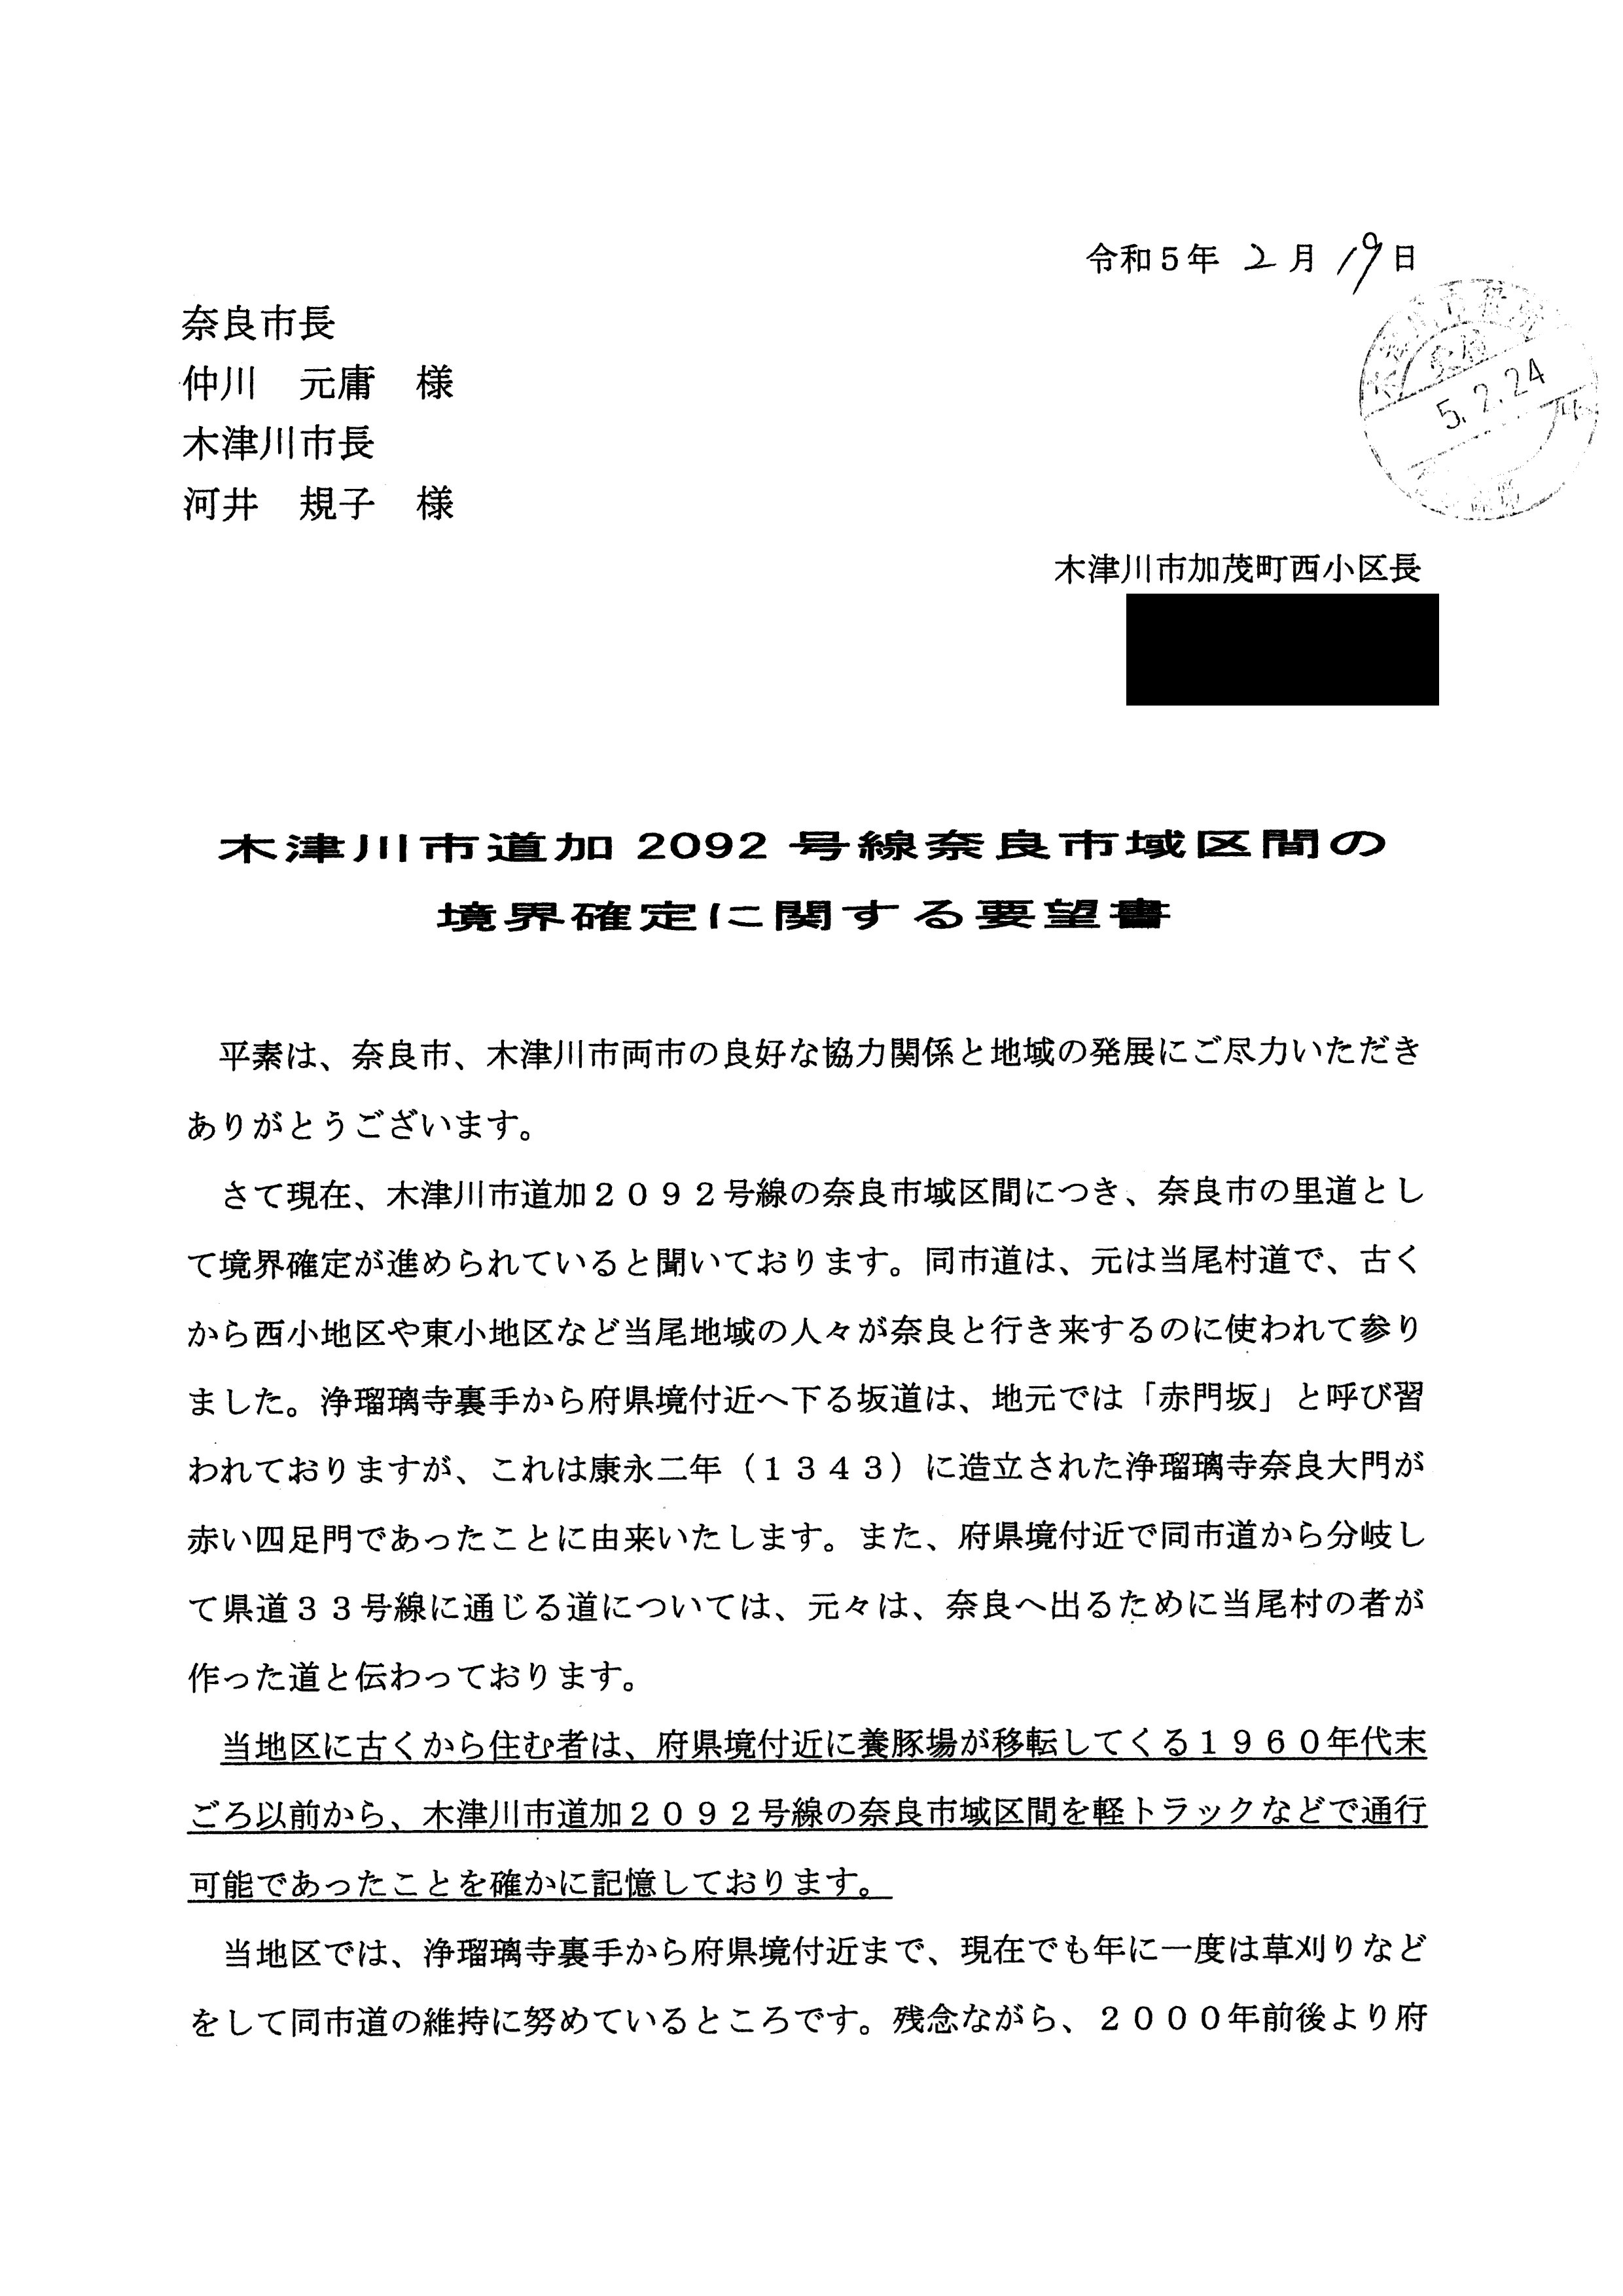 令和5(2023)年2月24日-木津川市道加2092号線奈良市域区間の境界確定に関する要望書-西小地区-01